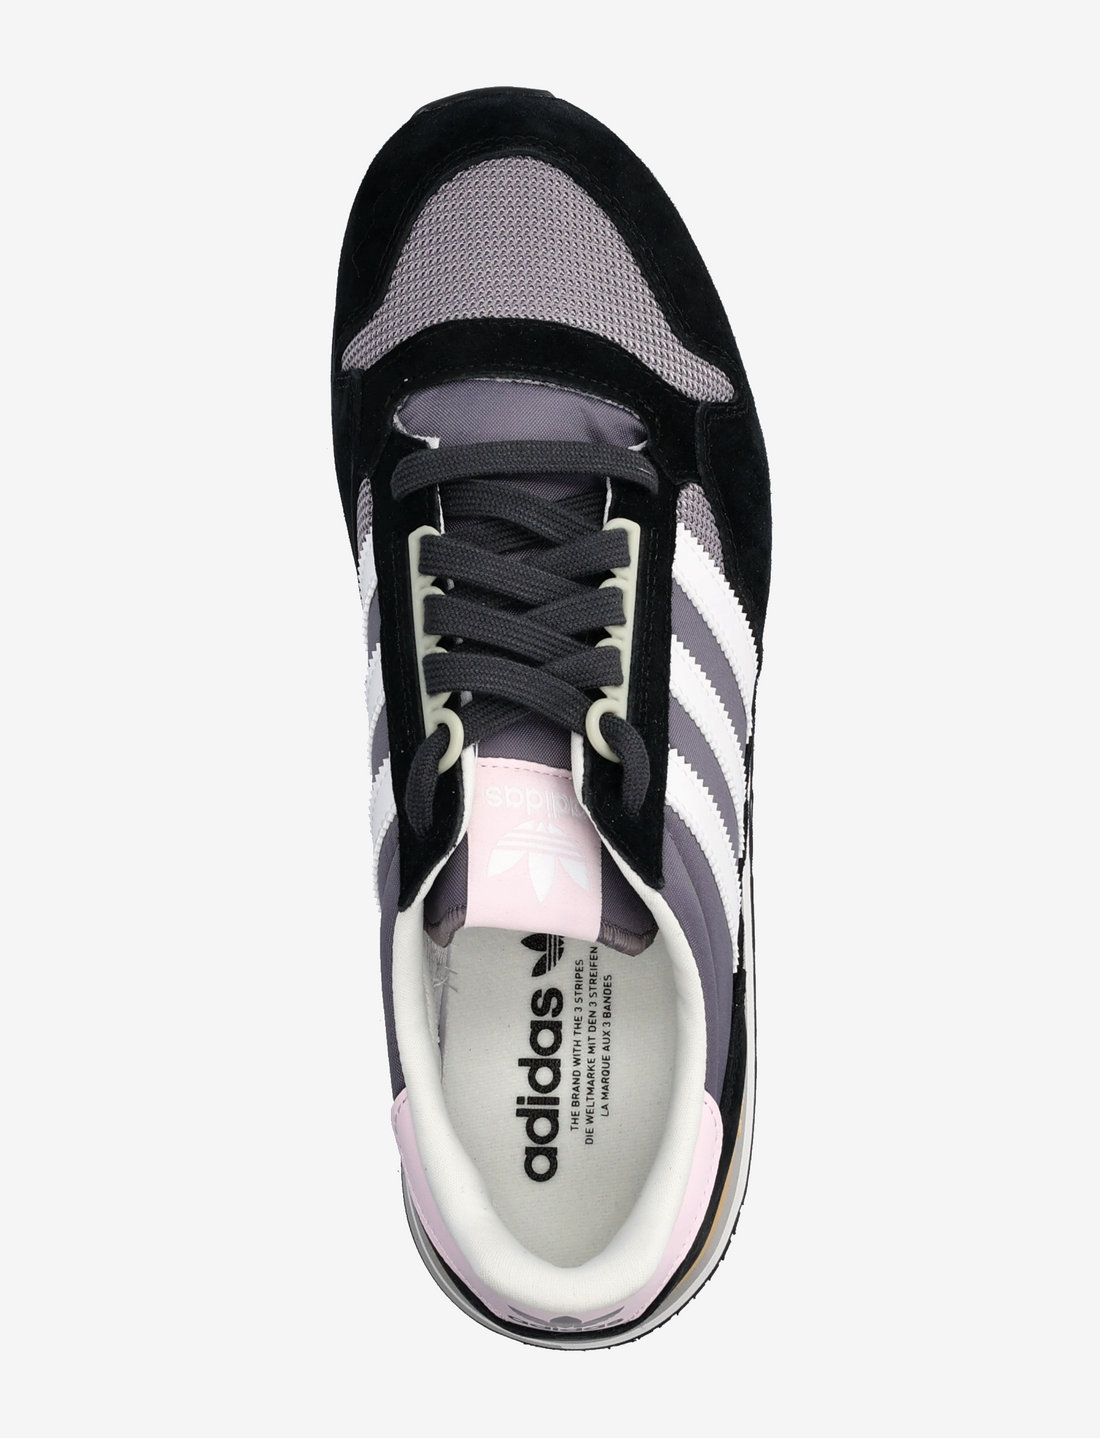 adidas Originals Zx 500 Shoes - Low top sneakers